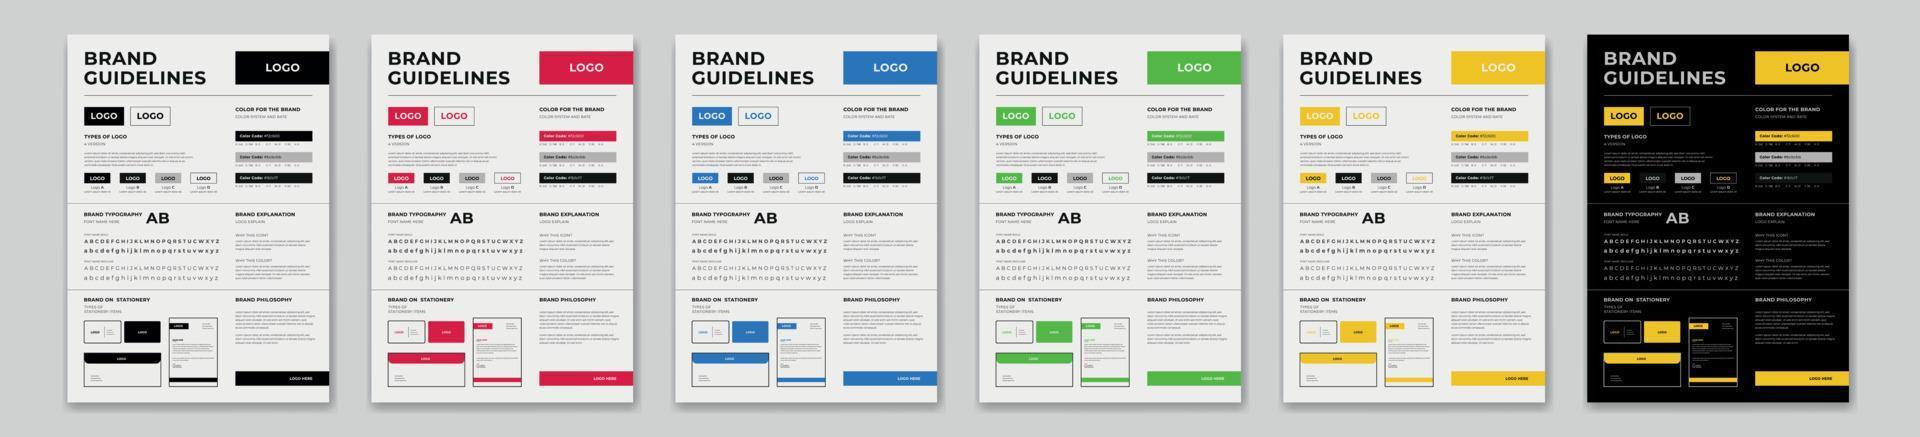 DIN A3 Brand Guideline Template Design, Brand Guideline Layout Set, Minimalist Brand Guidelines, Brand identity Template. vector